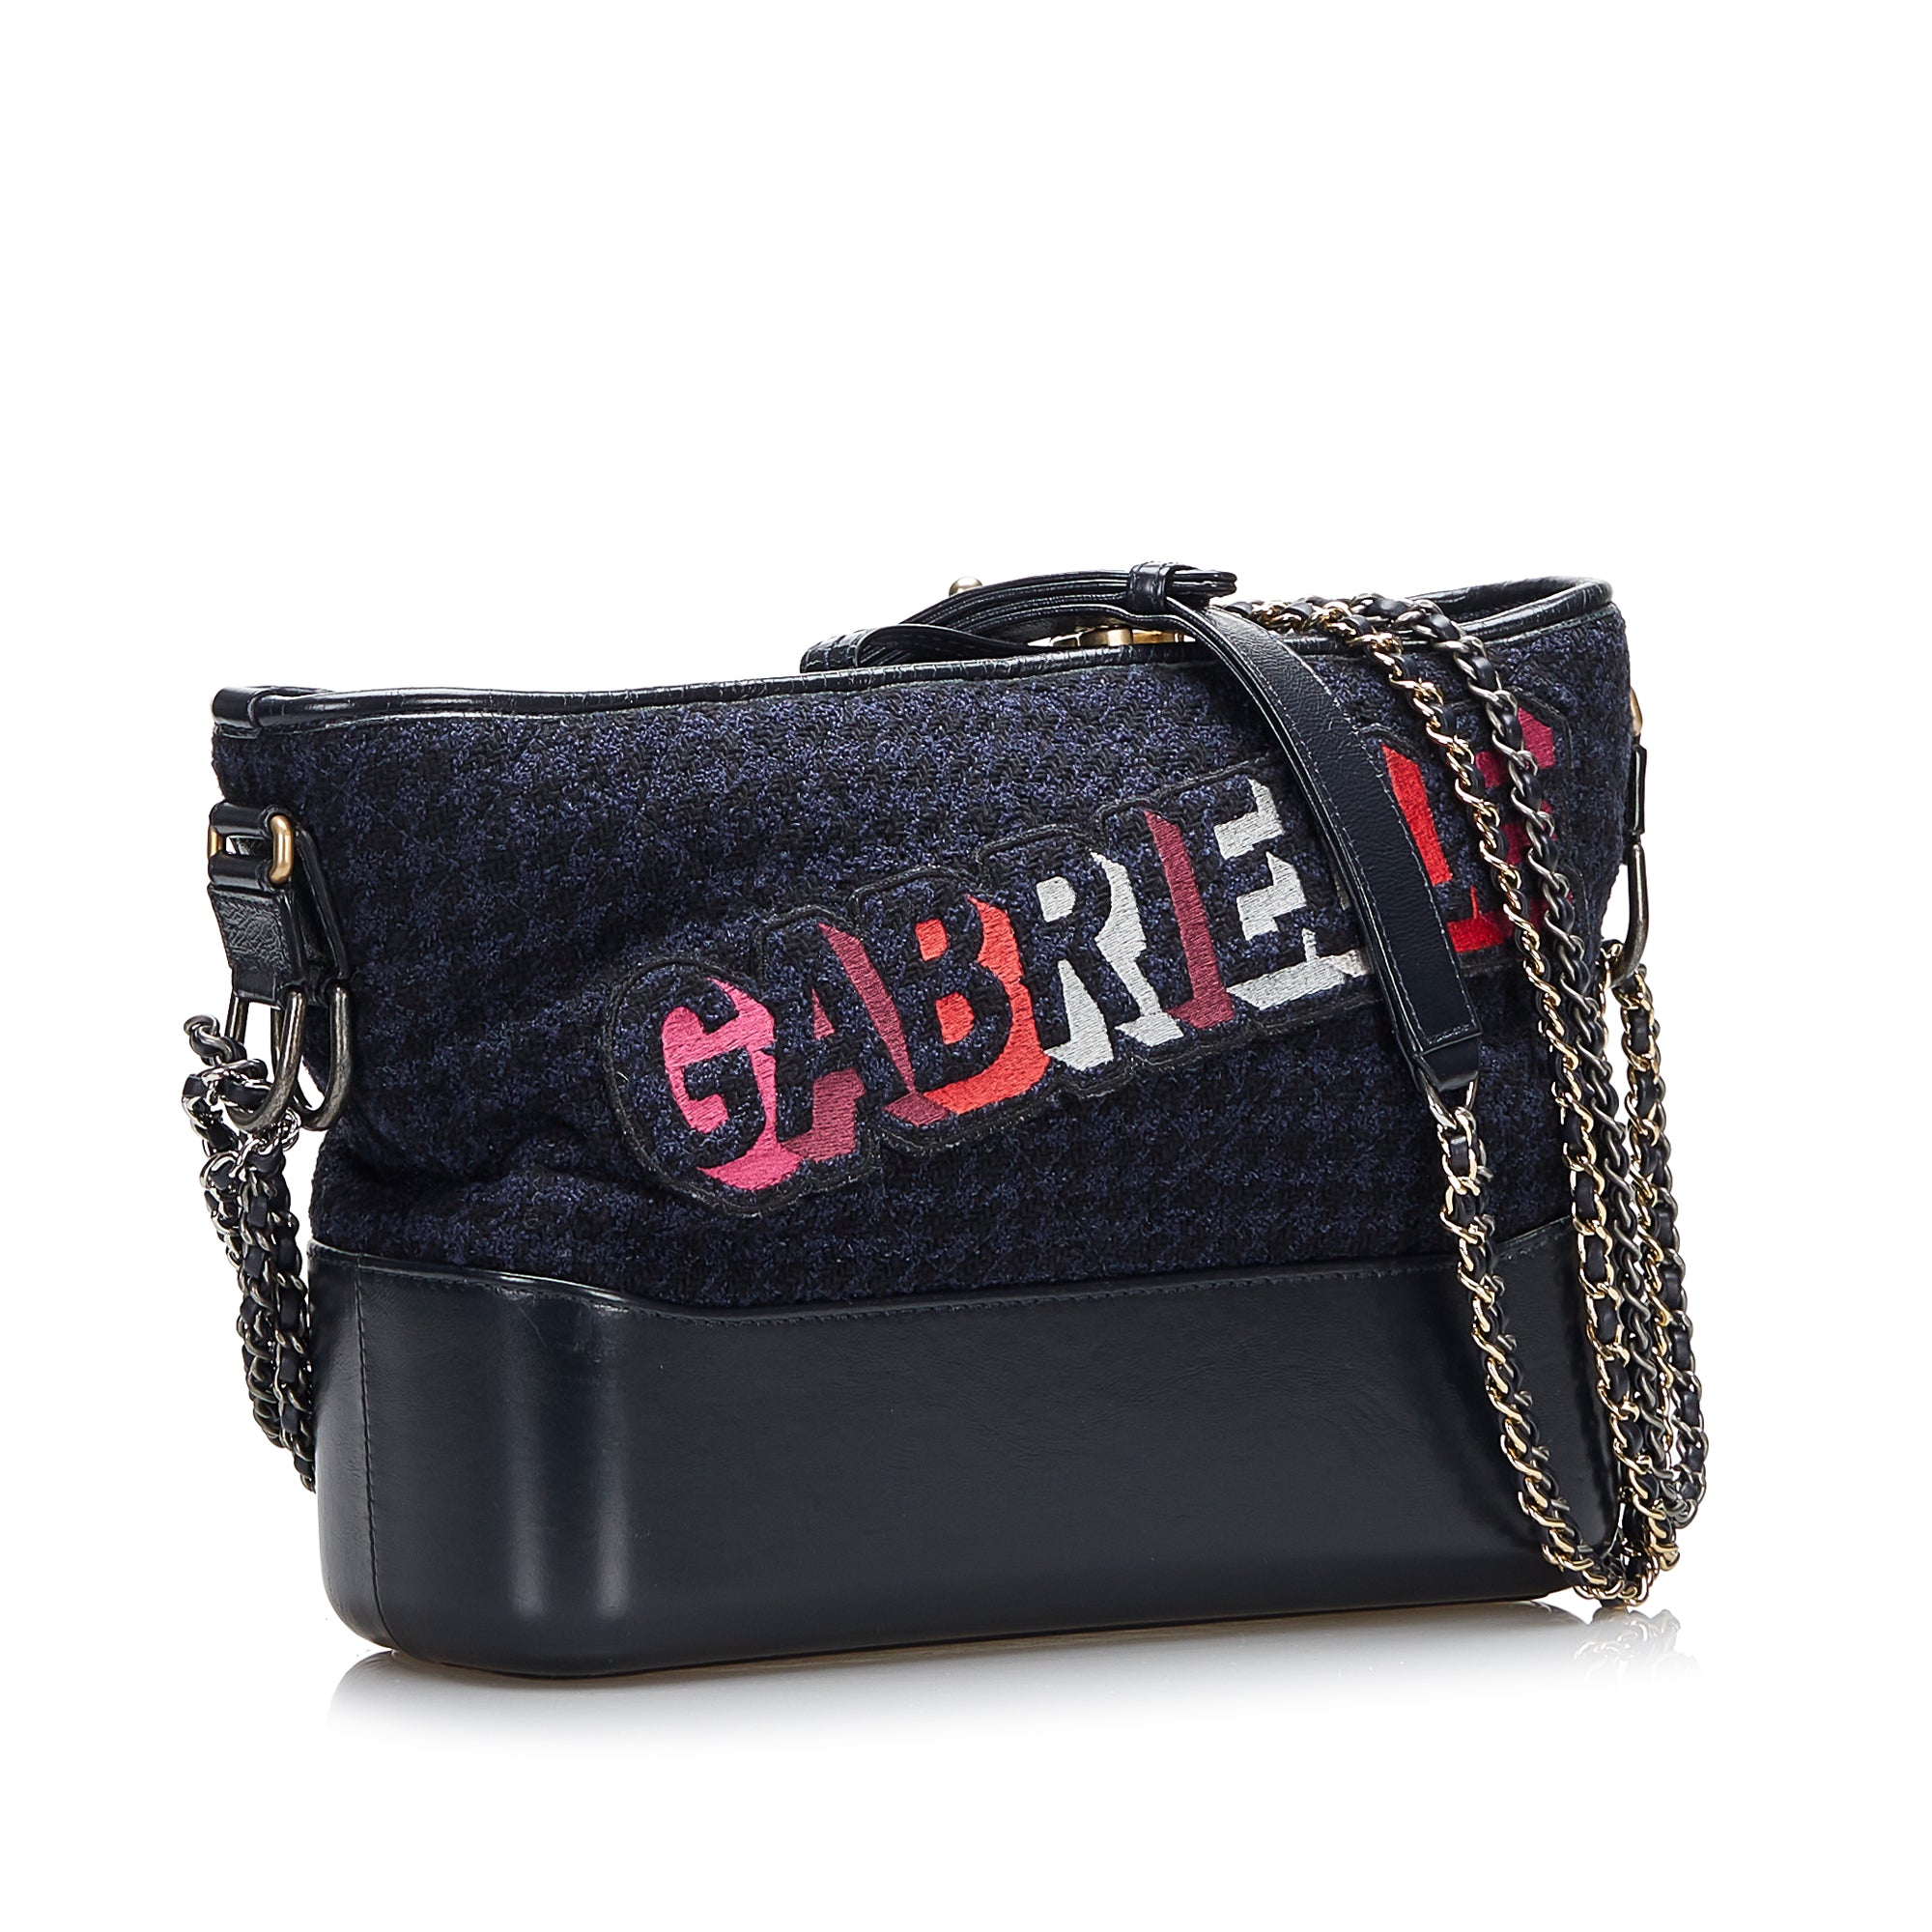 Chanel Pre-Owned Medium Gabrielle Tweed Shoulder Bag